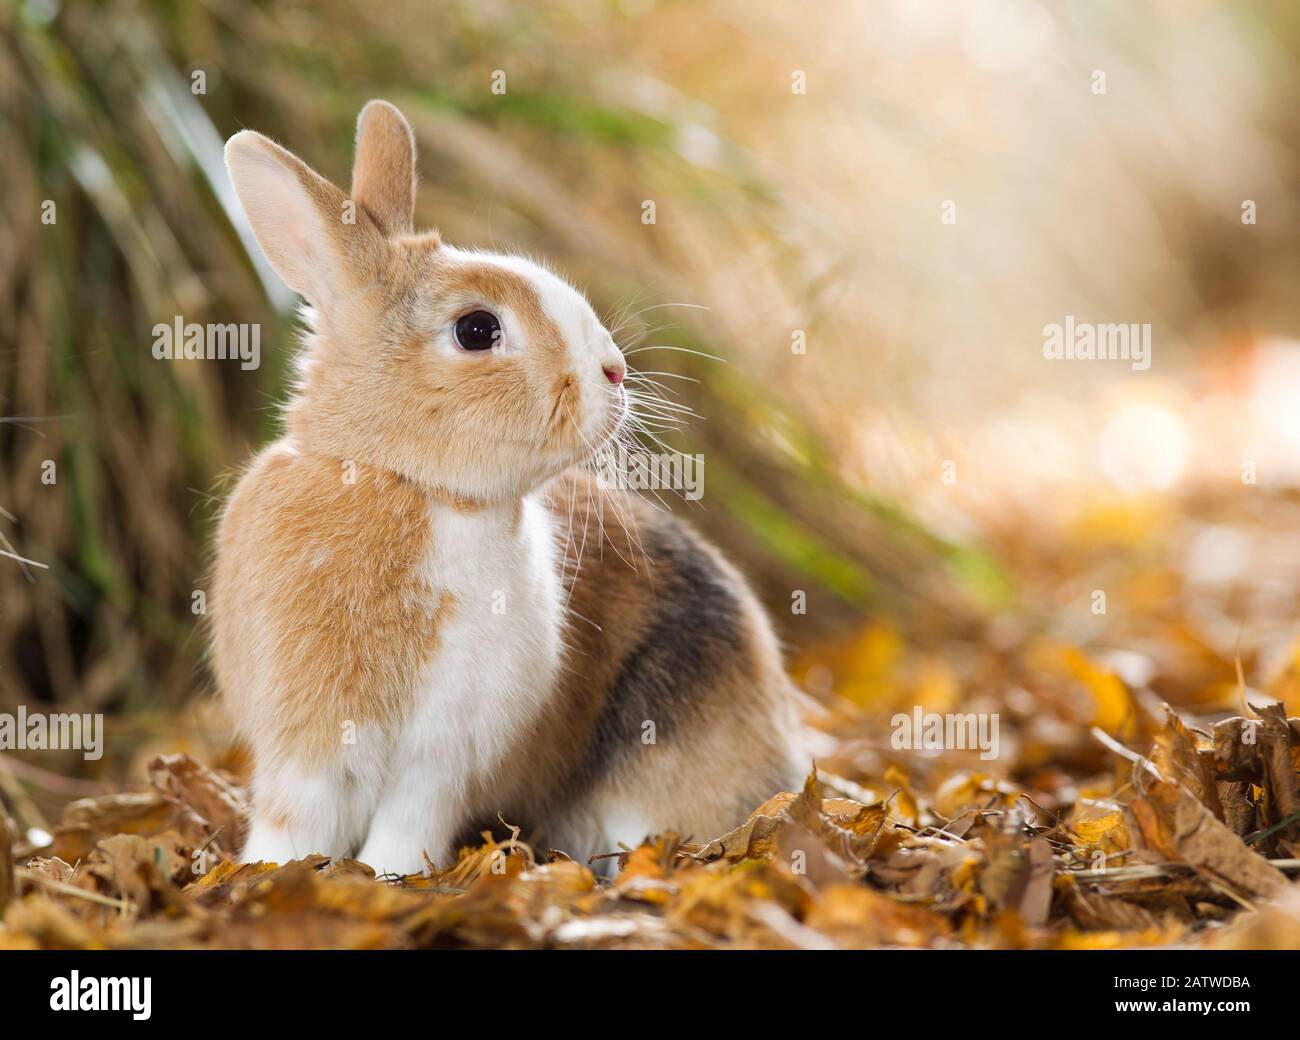 Netherland Dwarf rabbit sitting in dry autumn leaves. Germany Stock Photo